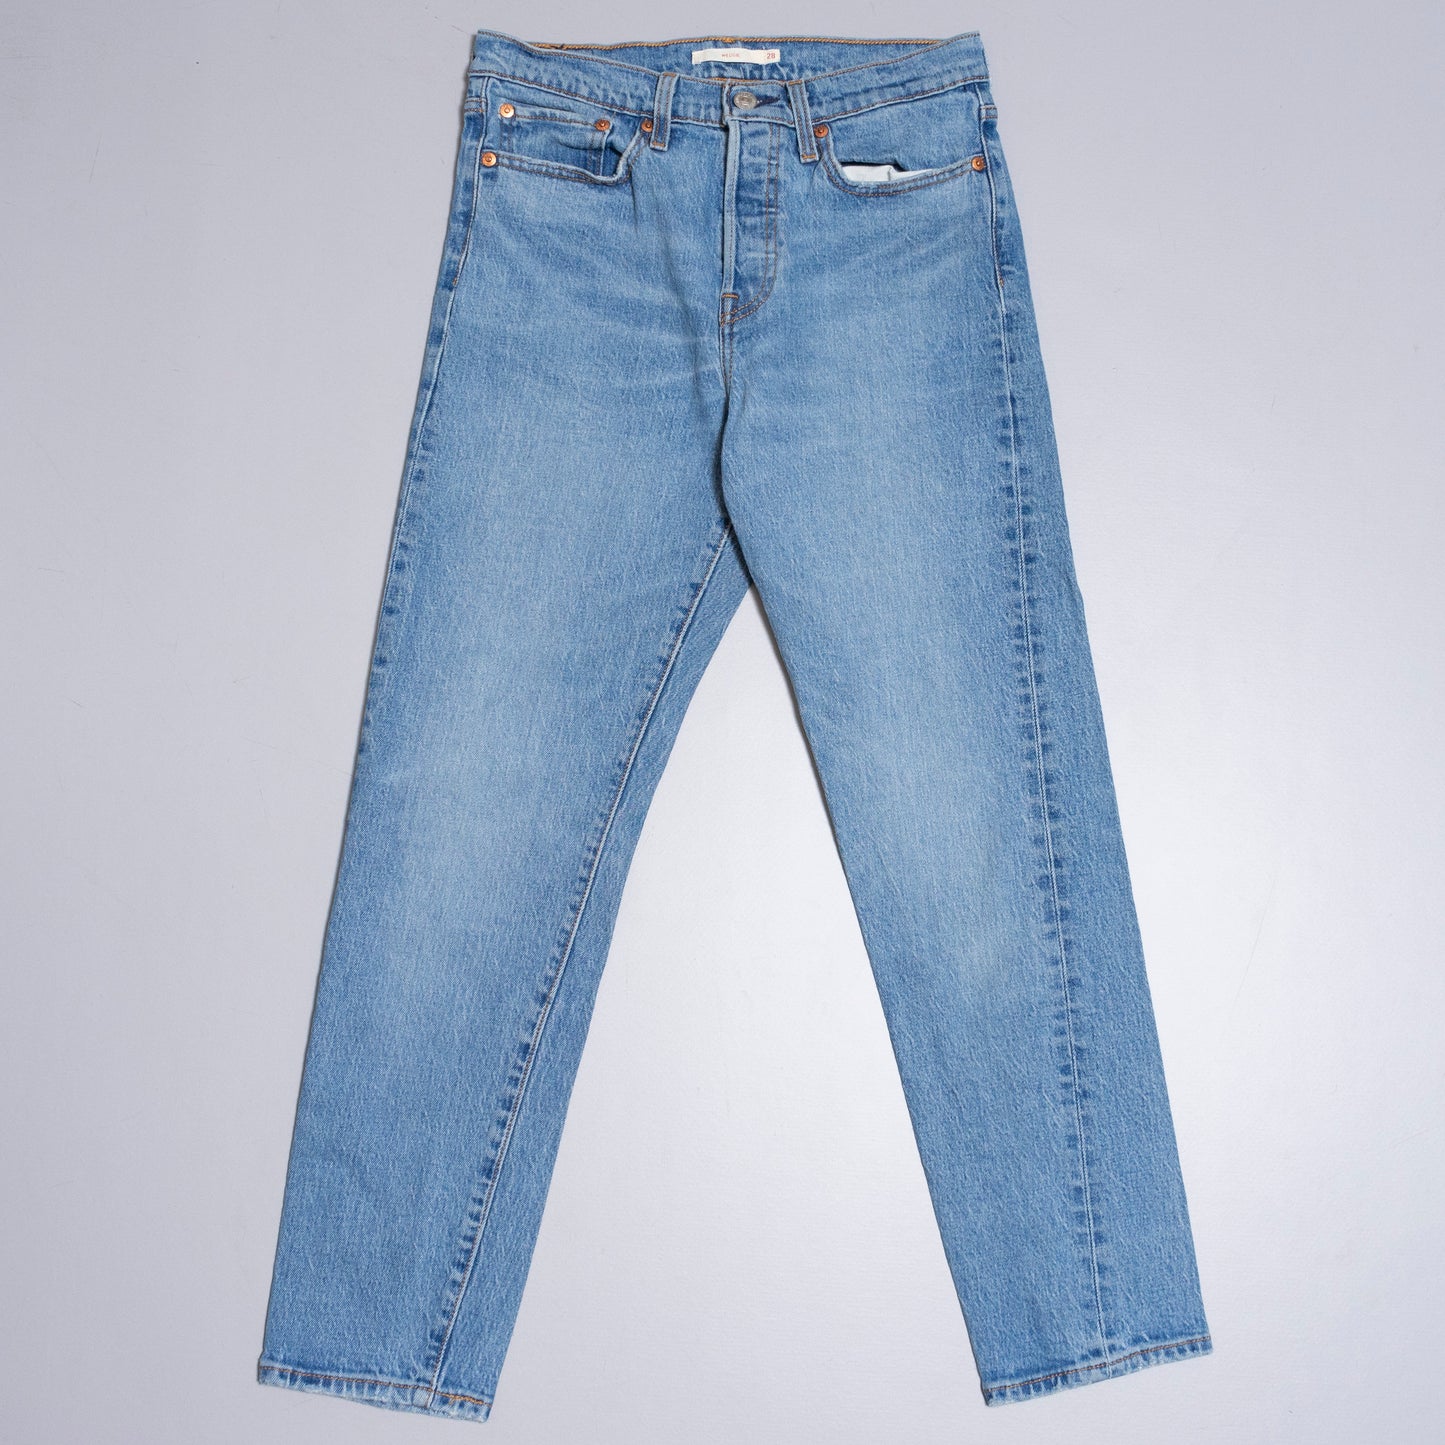 Levis Premium Wedgie Jeans, W28